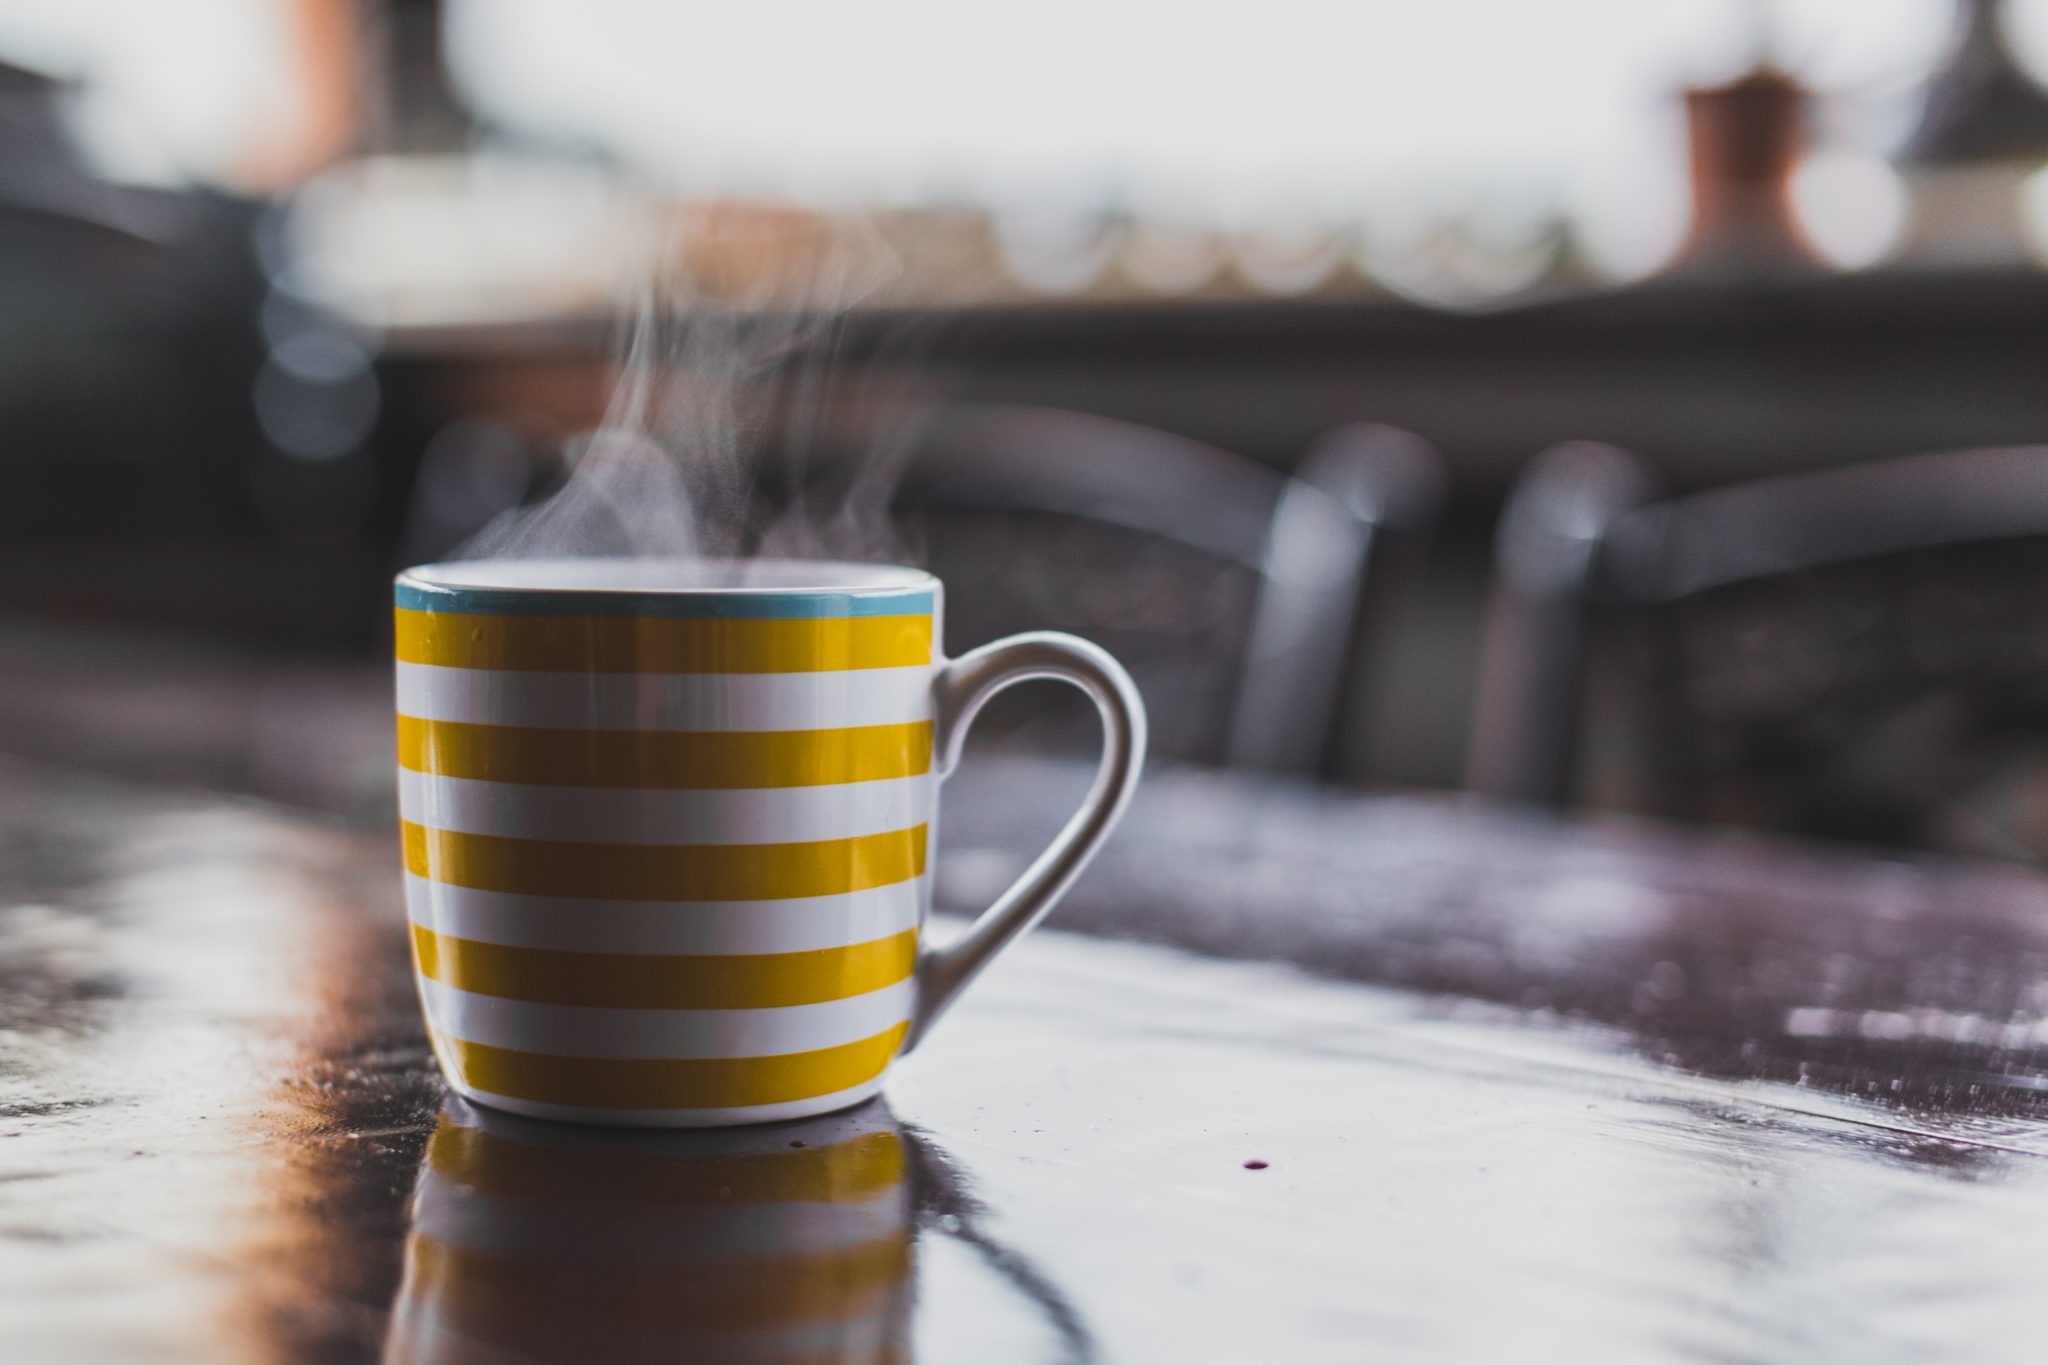 Hot coffee in a stripped yellow mug